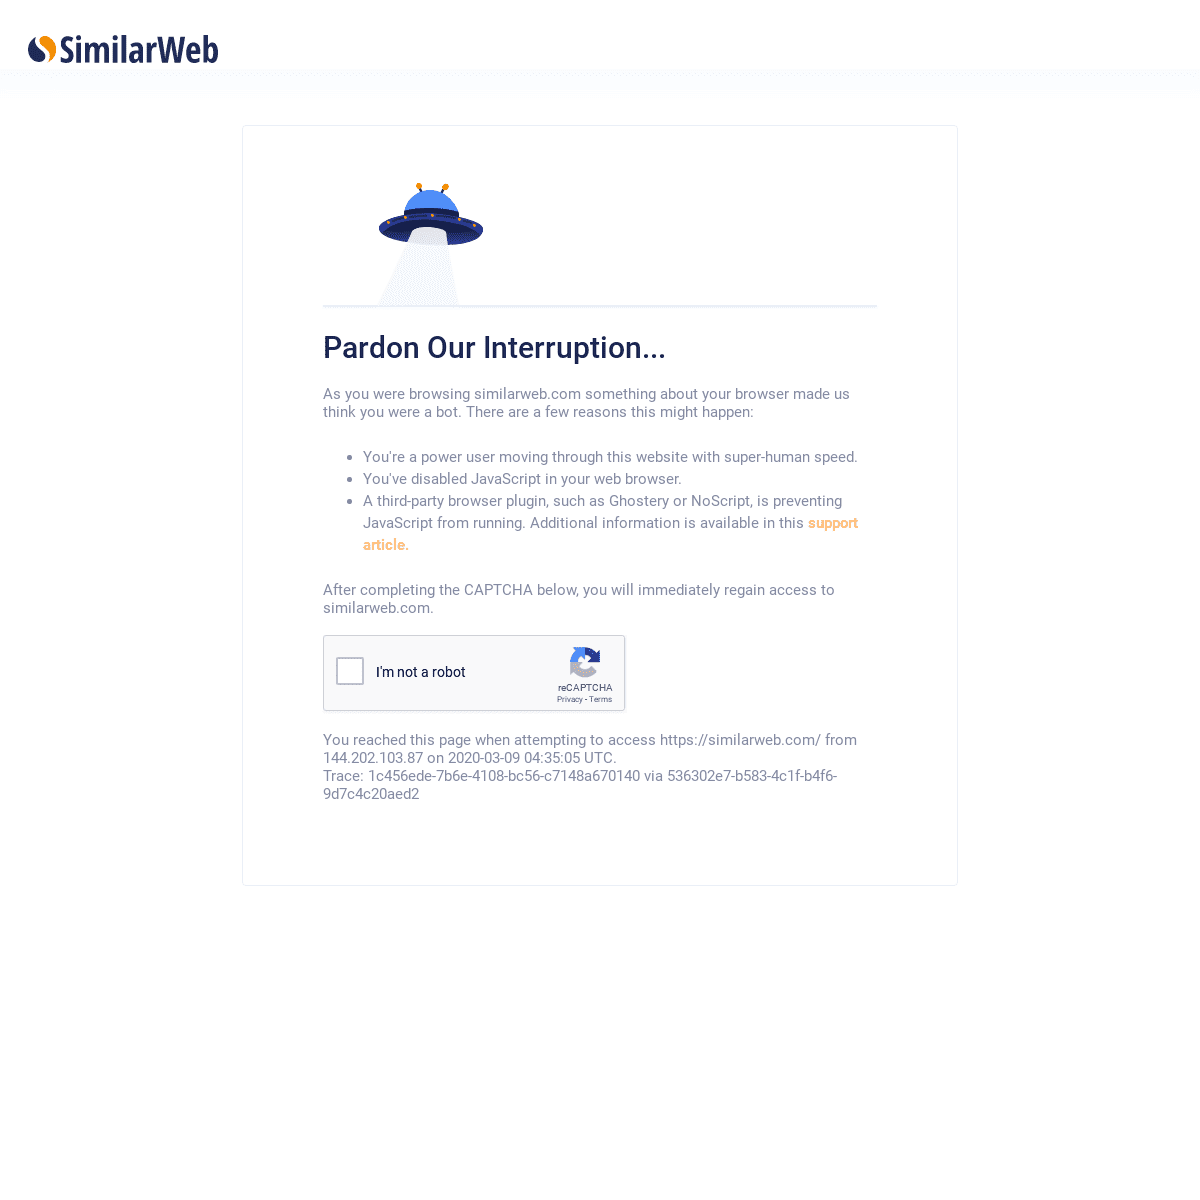 A complete backup of similarweb.com